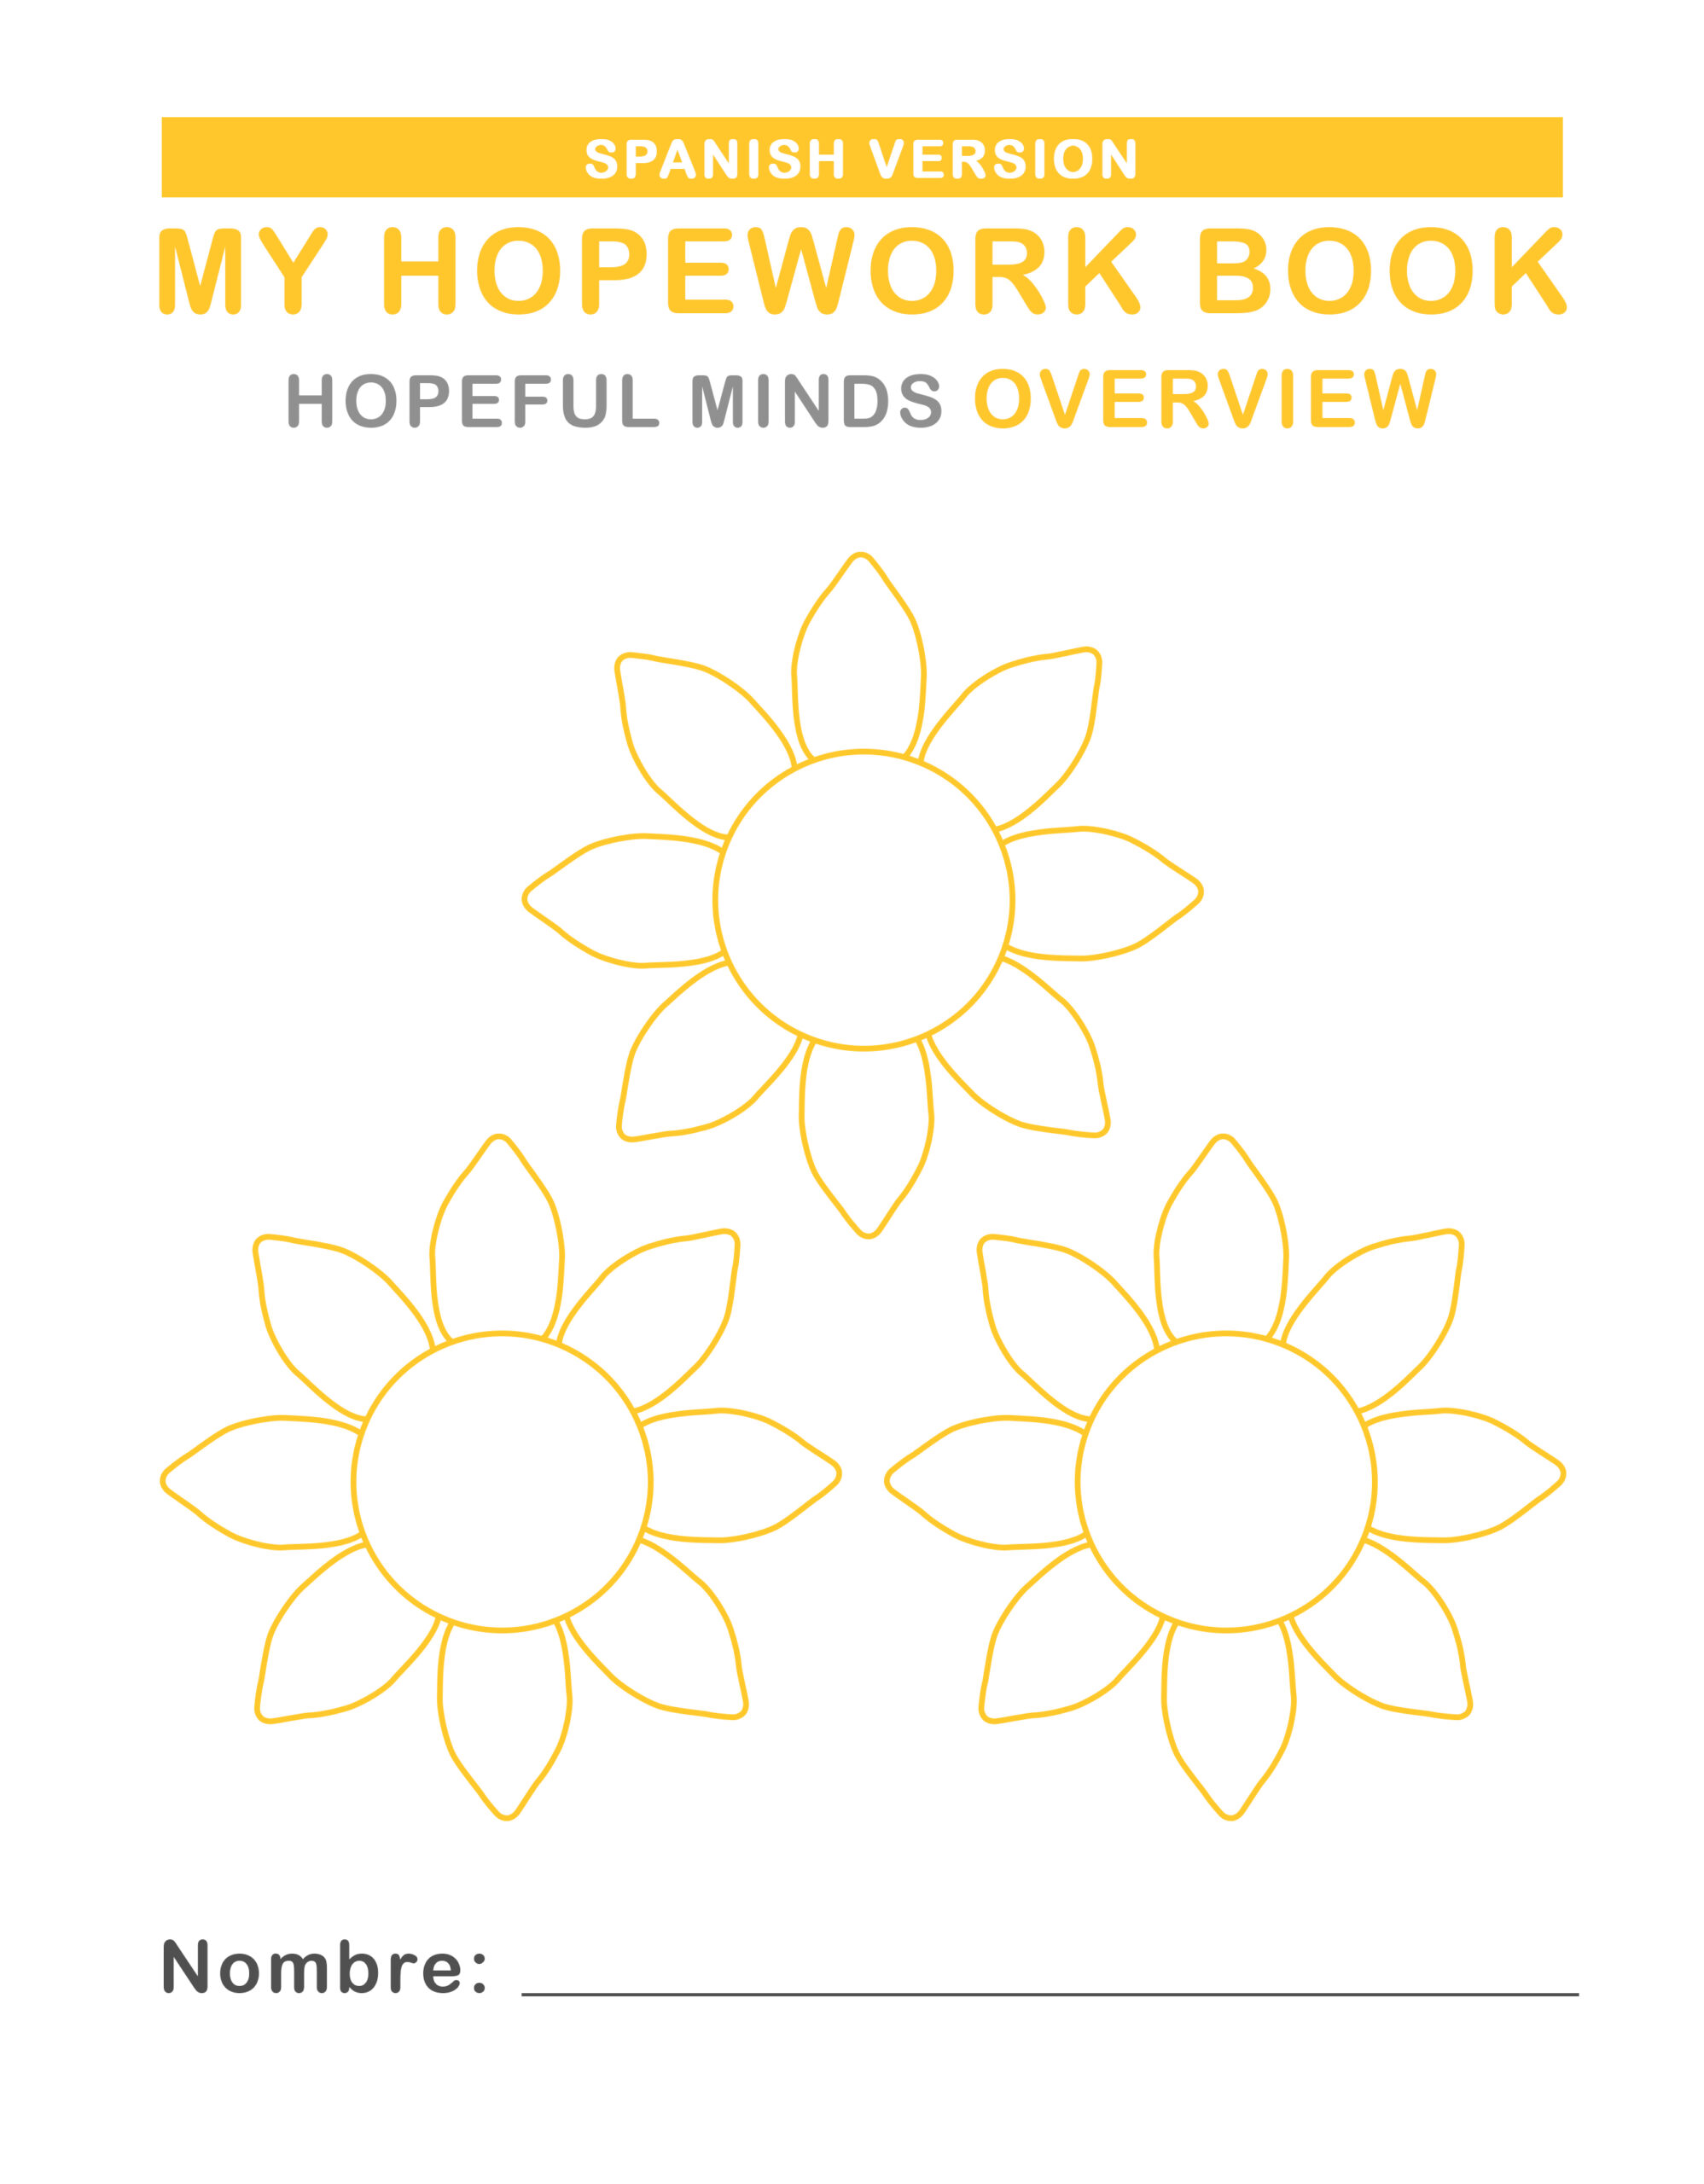 Español – Hopeful Minds Overview Hopework Book